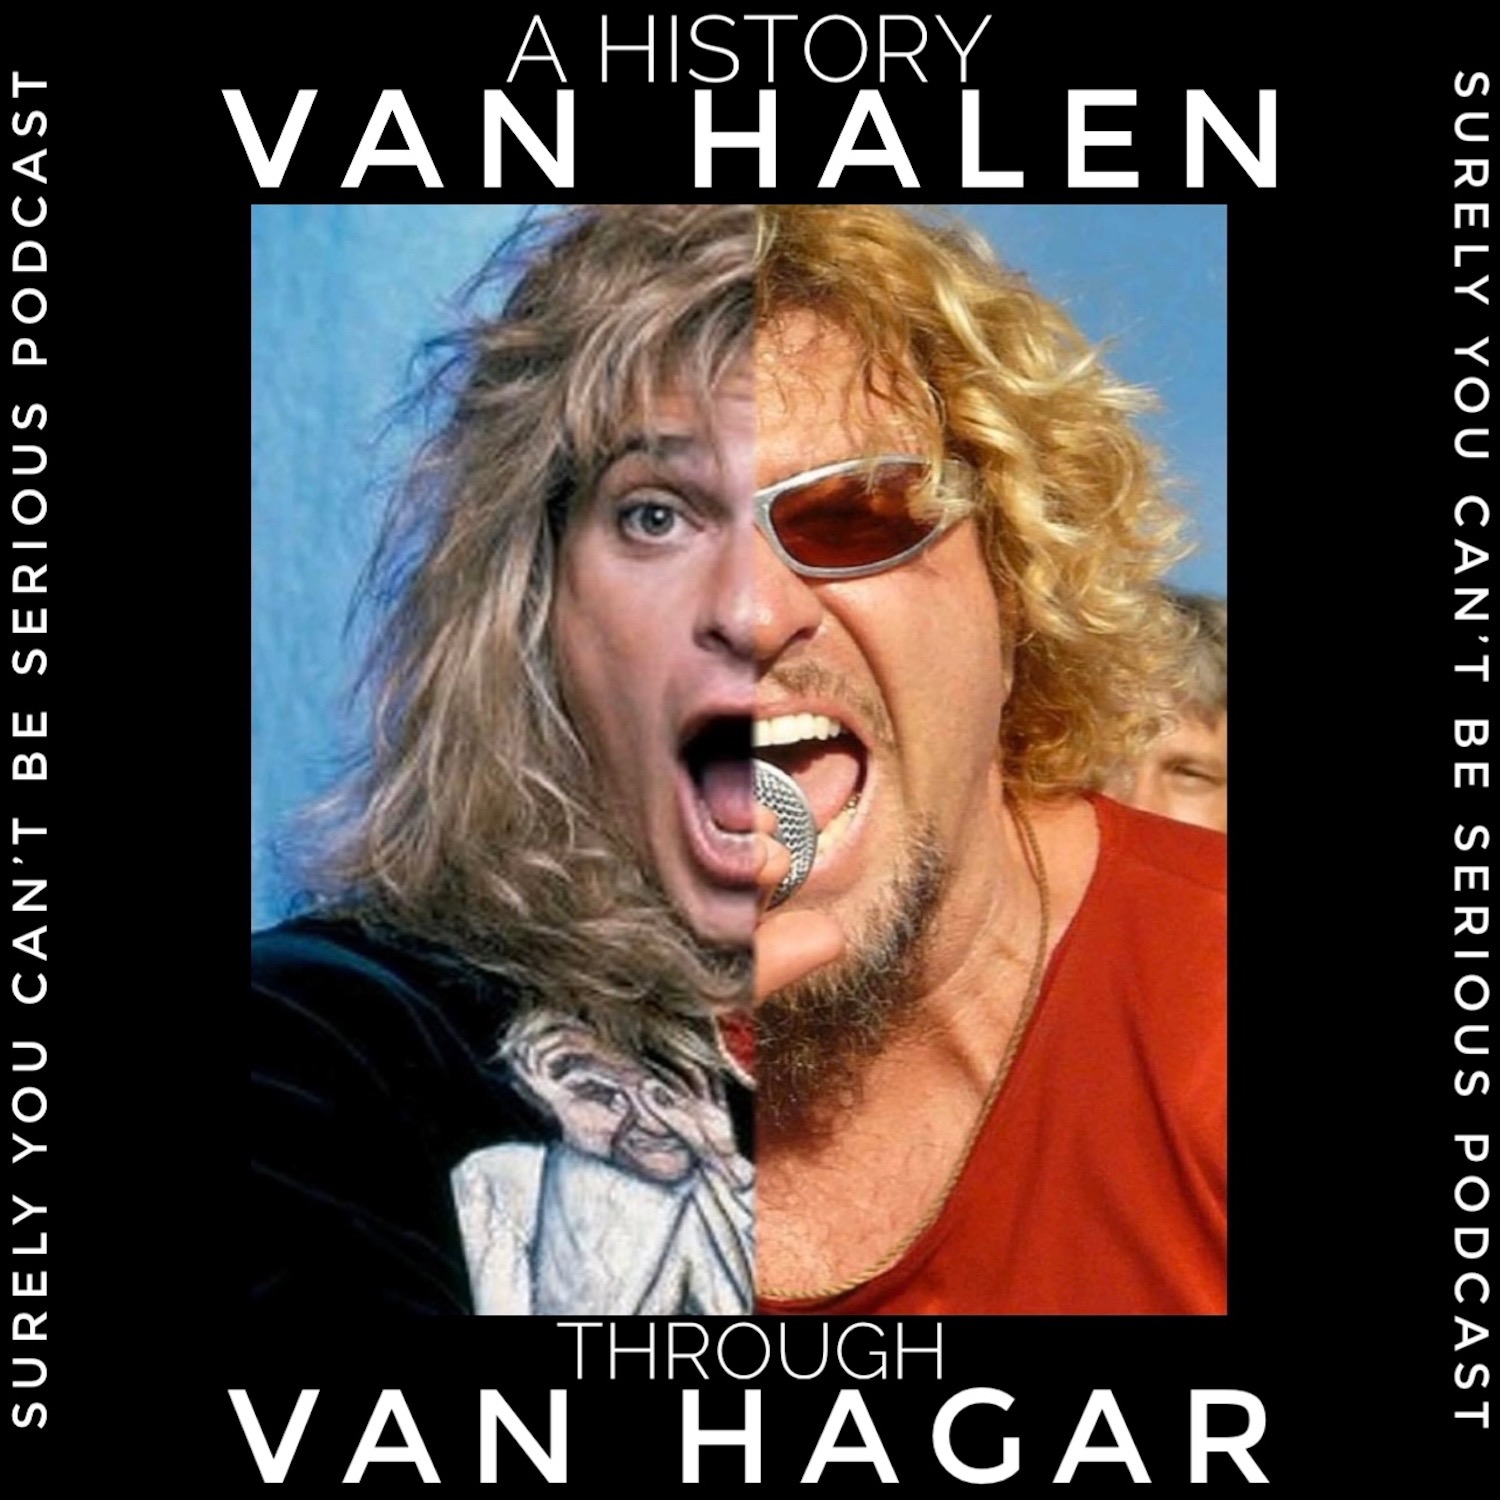 A History: Van Halen through Van Hagar (Part 1 of 3) "Pretty Woman to Eruption" Image